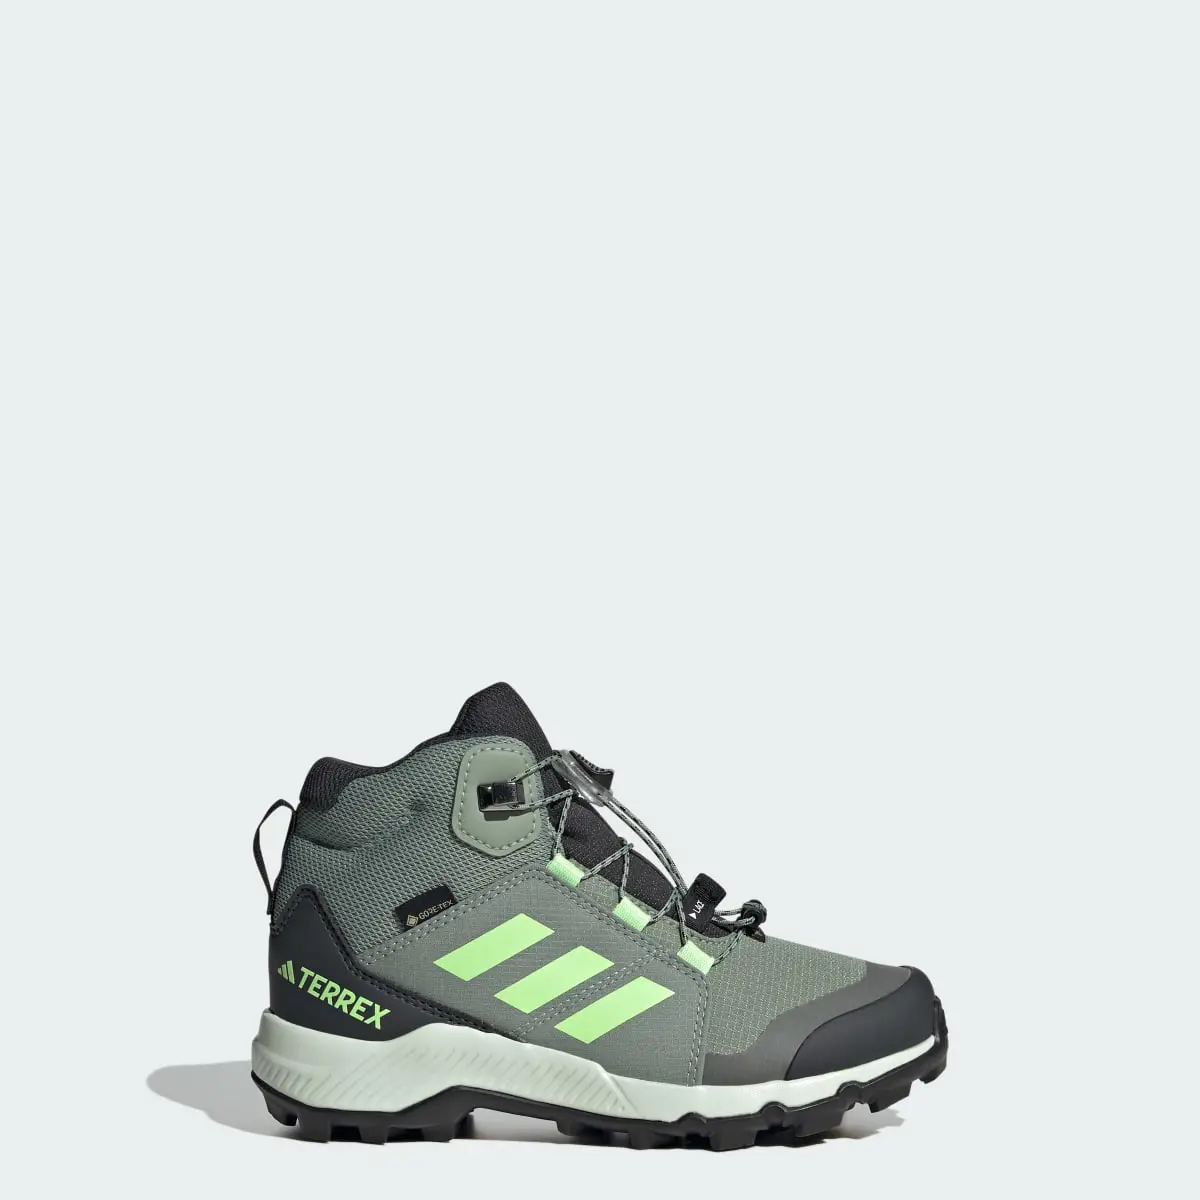 Adidas Chaussure de randonnée Organizer Mid GORE-TEX. 1